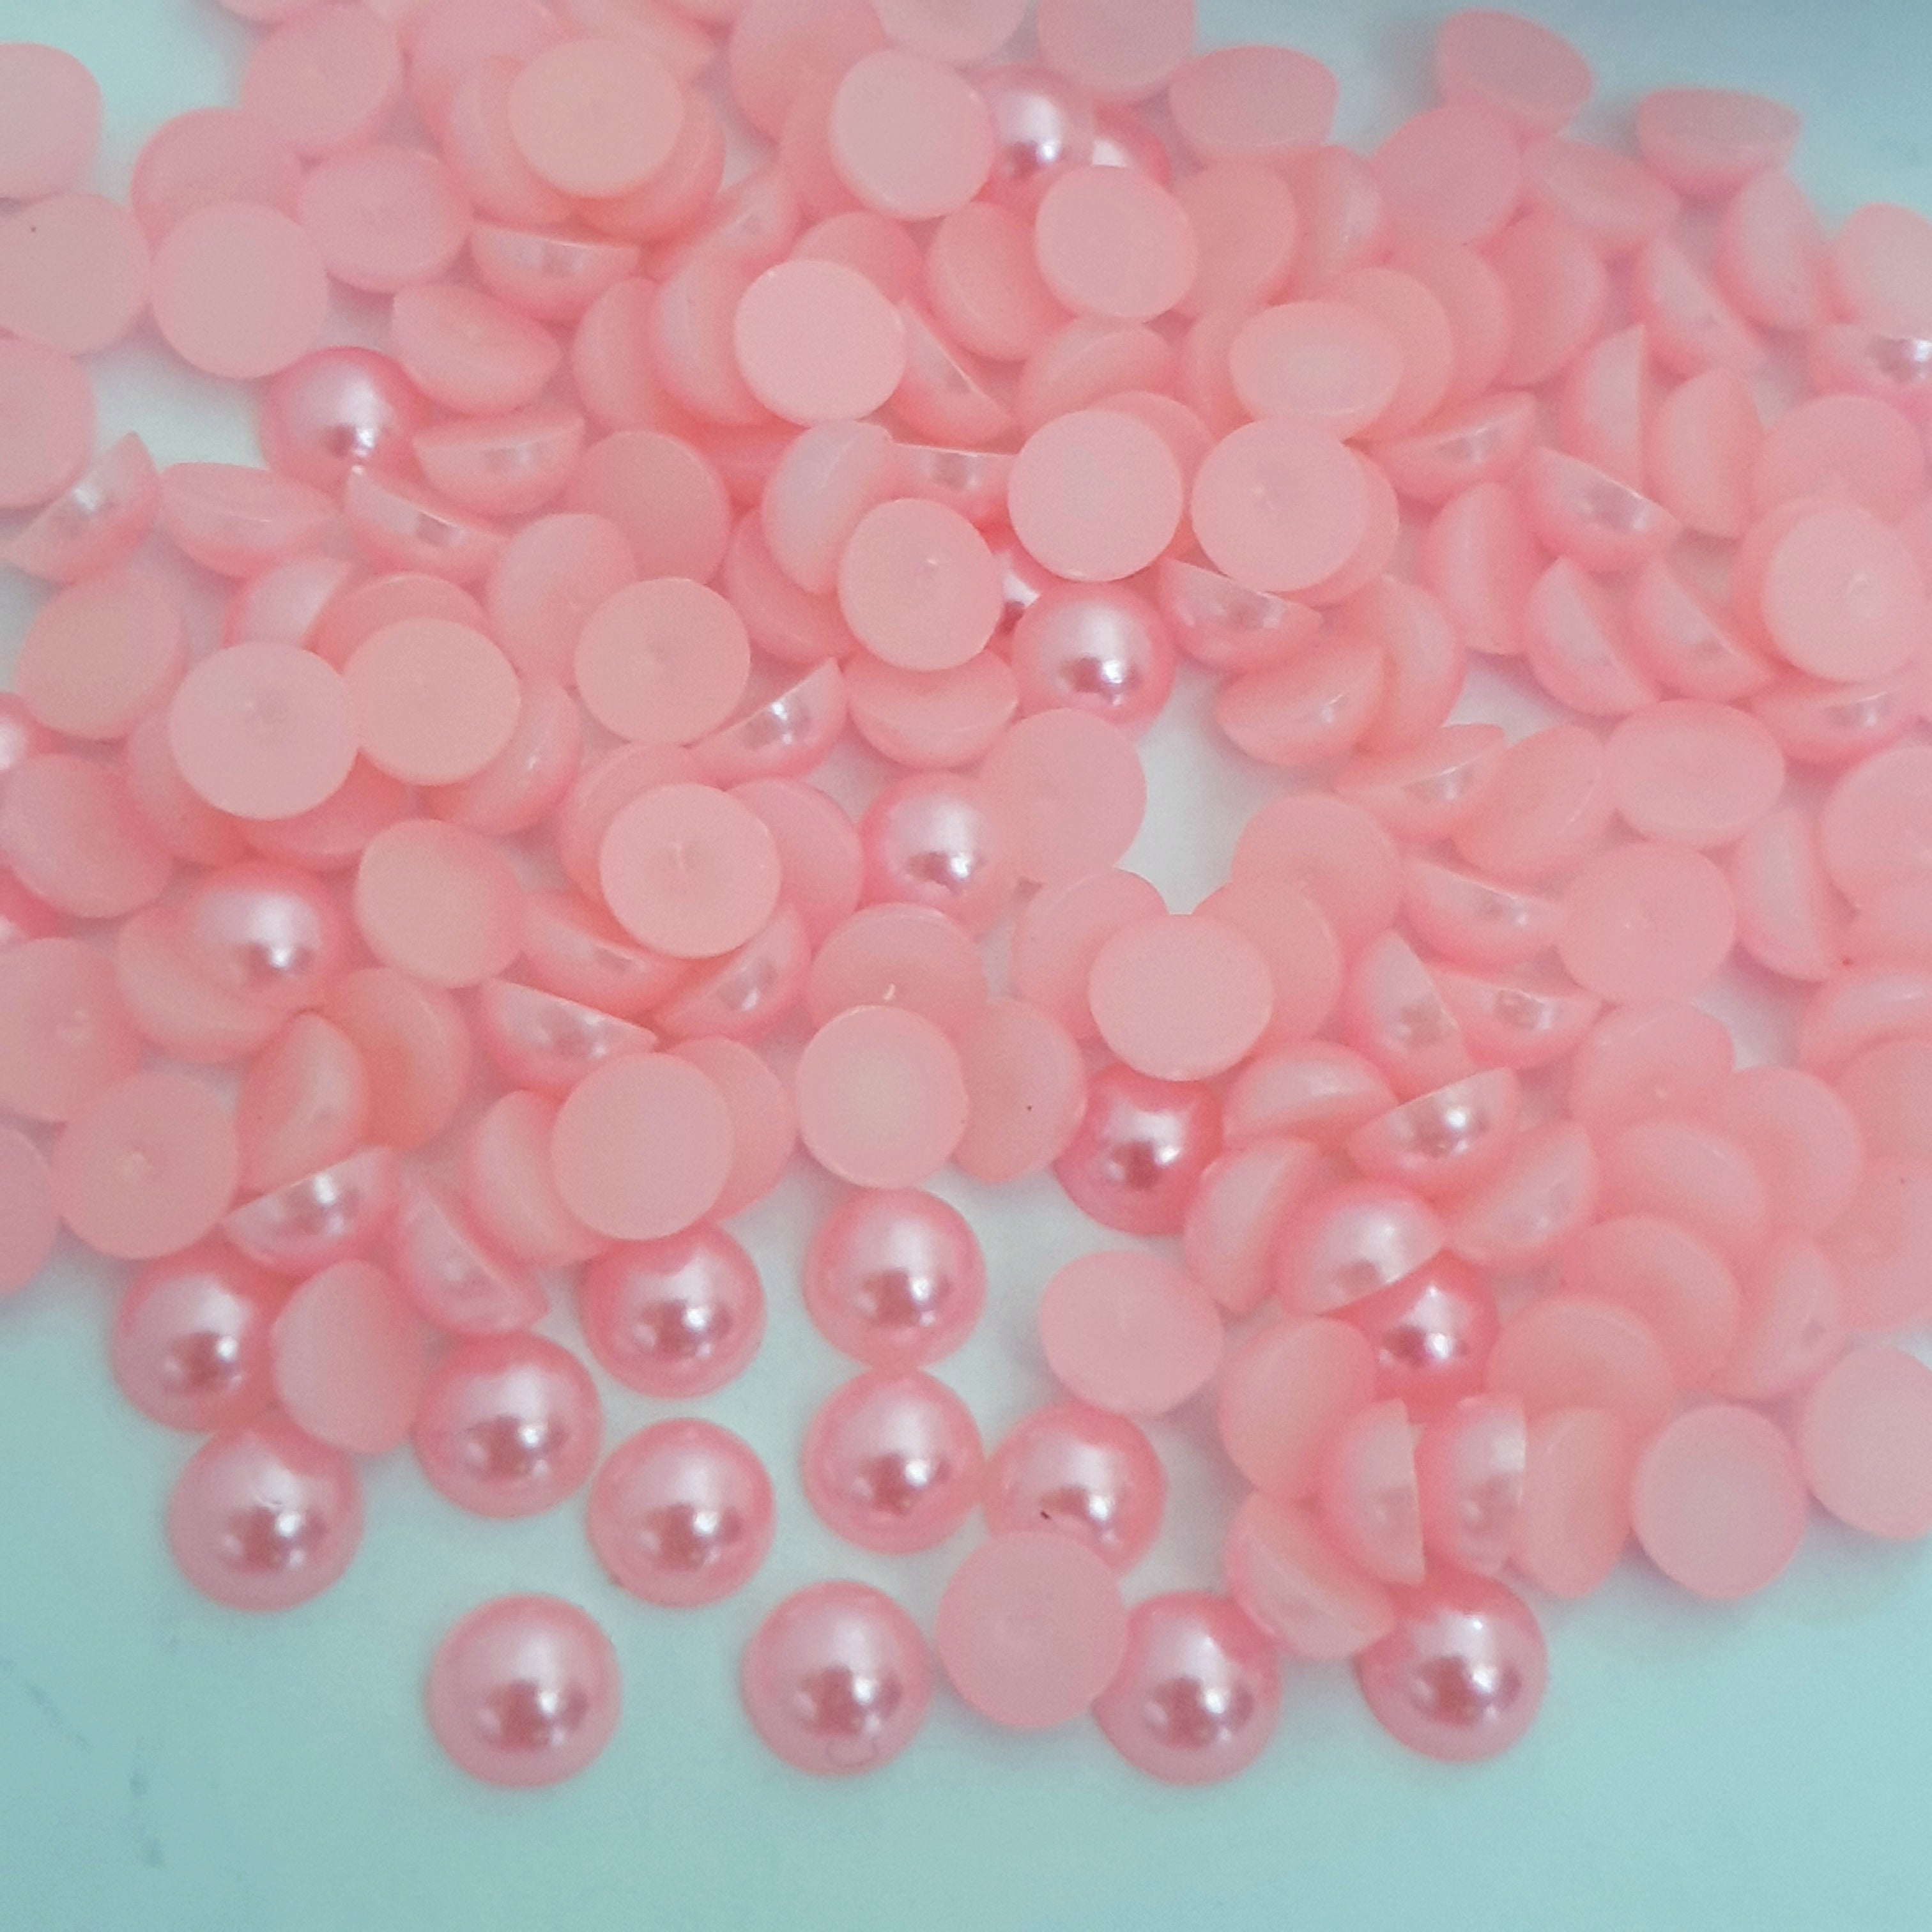 MajorCrafts Light Pink Flat Back Half Round Resin Embellishment Pearls C28